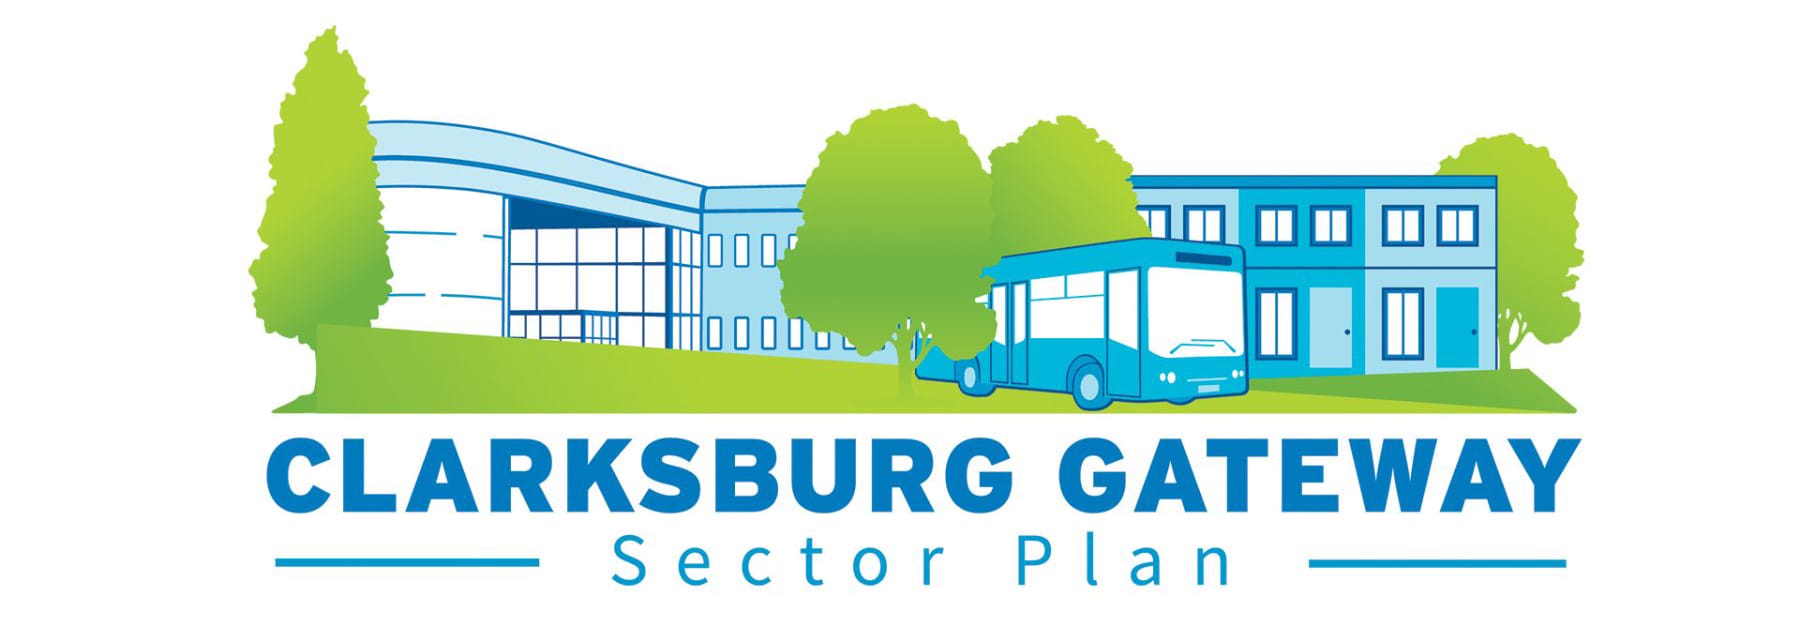 Clarksburg Gateway Sector Plan